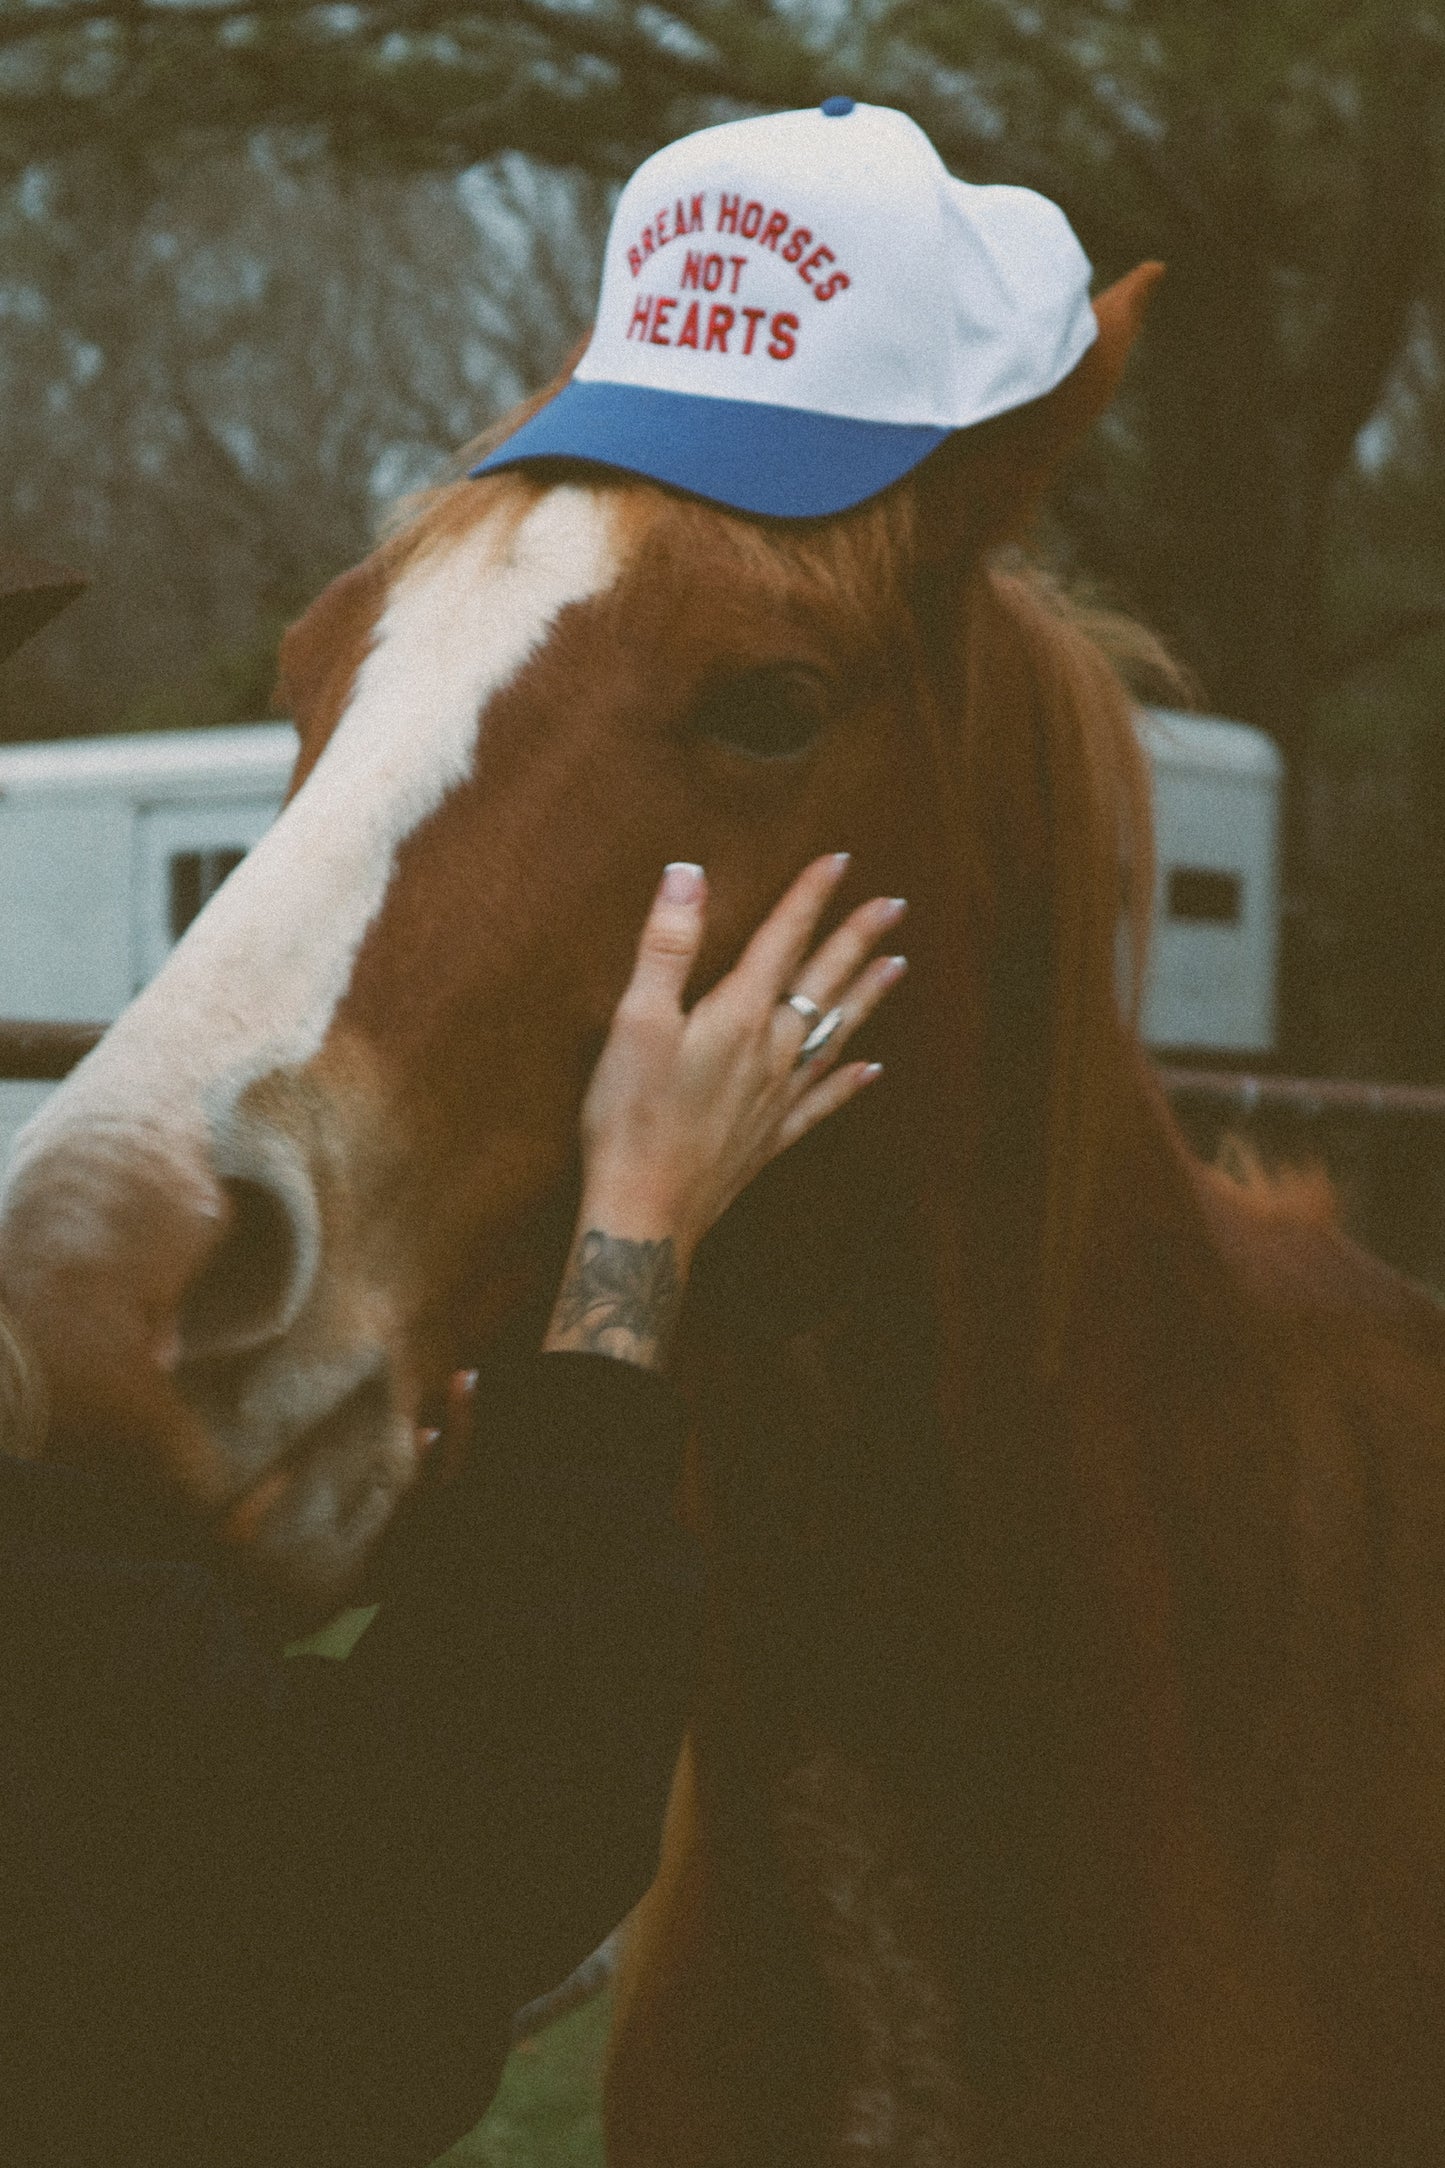 BREAK HORSES NOT HEARTS TRUCKER HAT